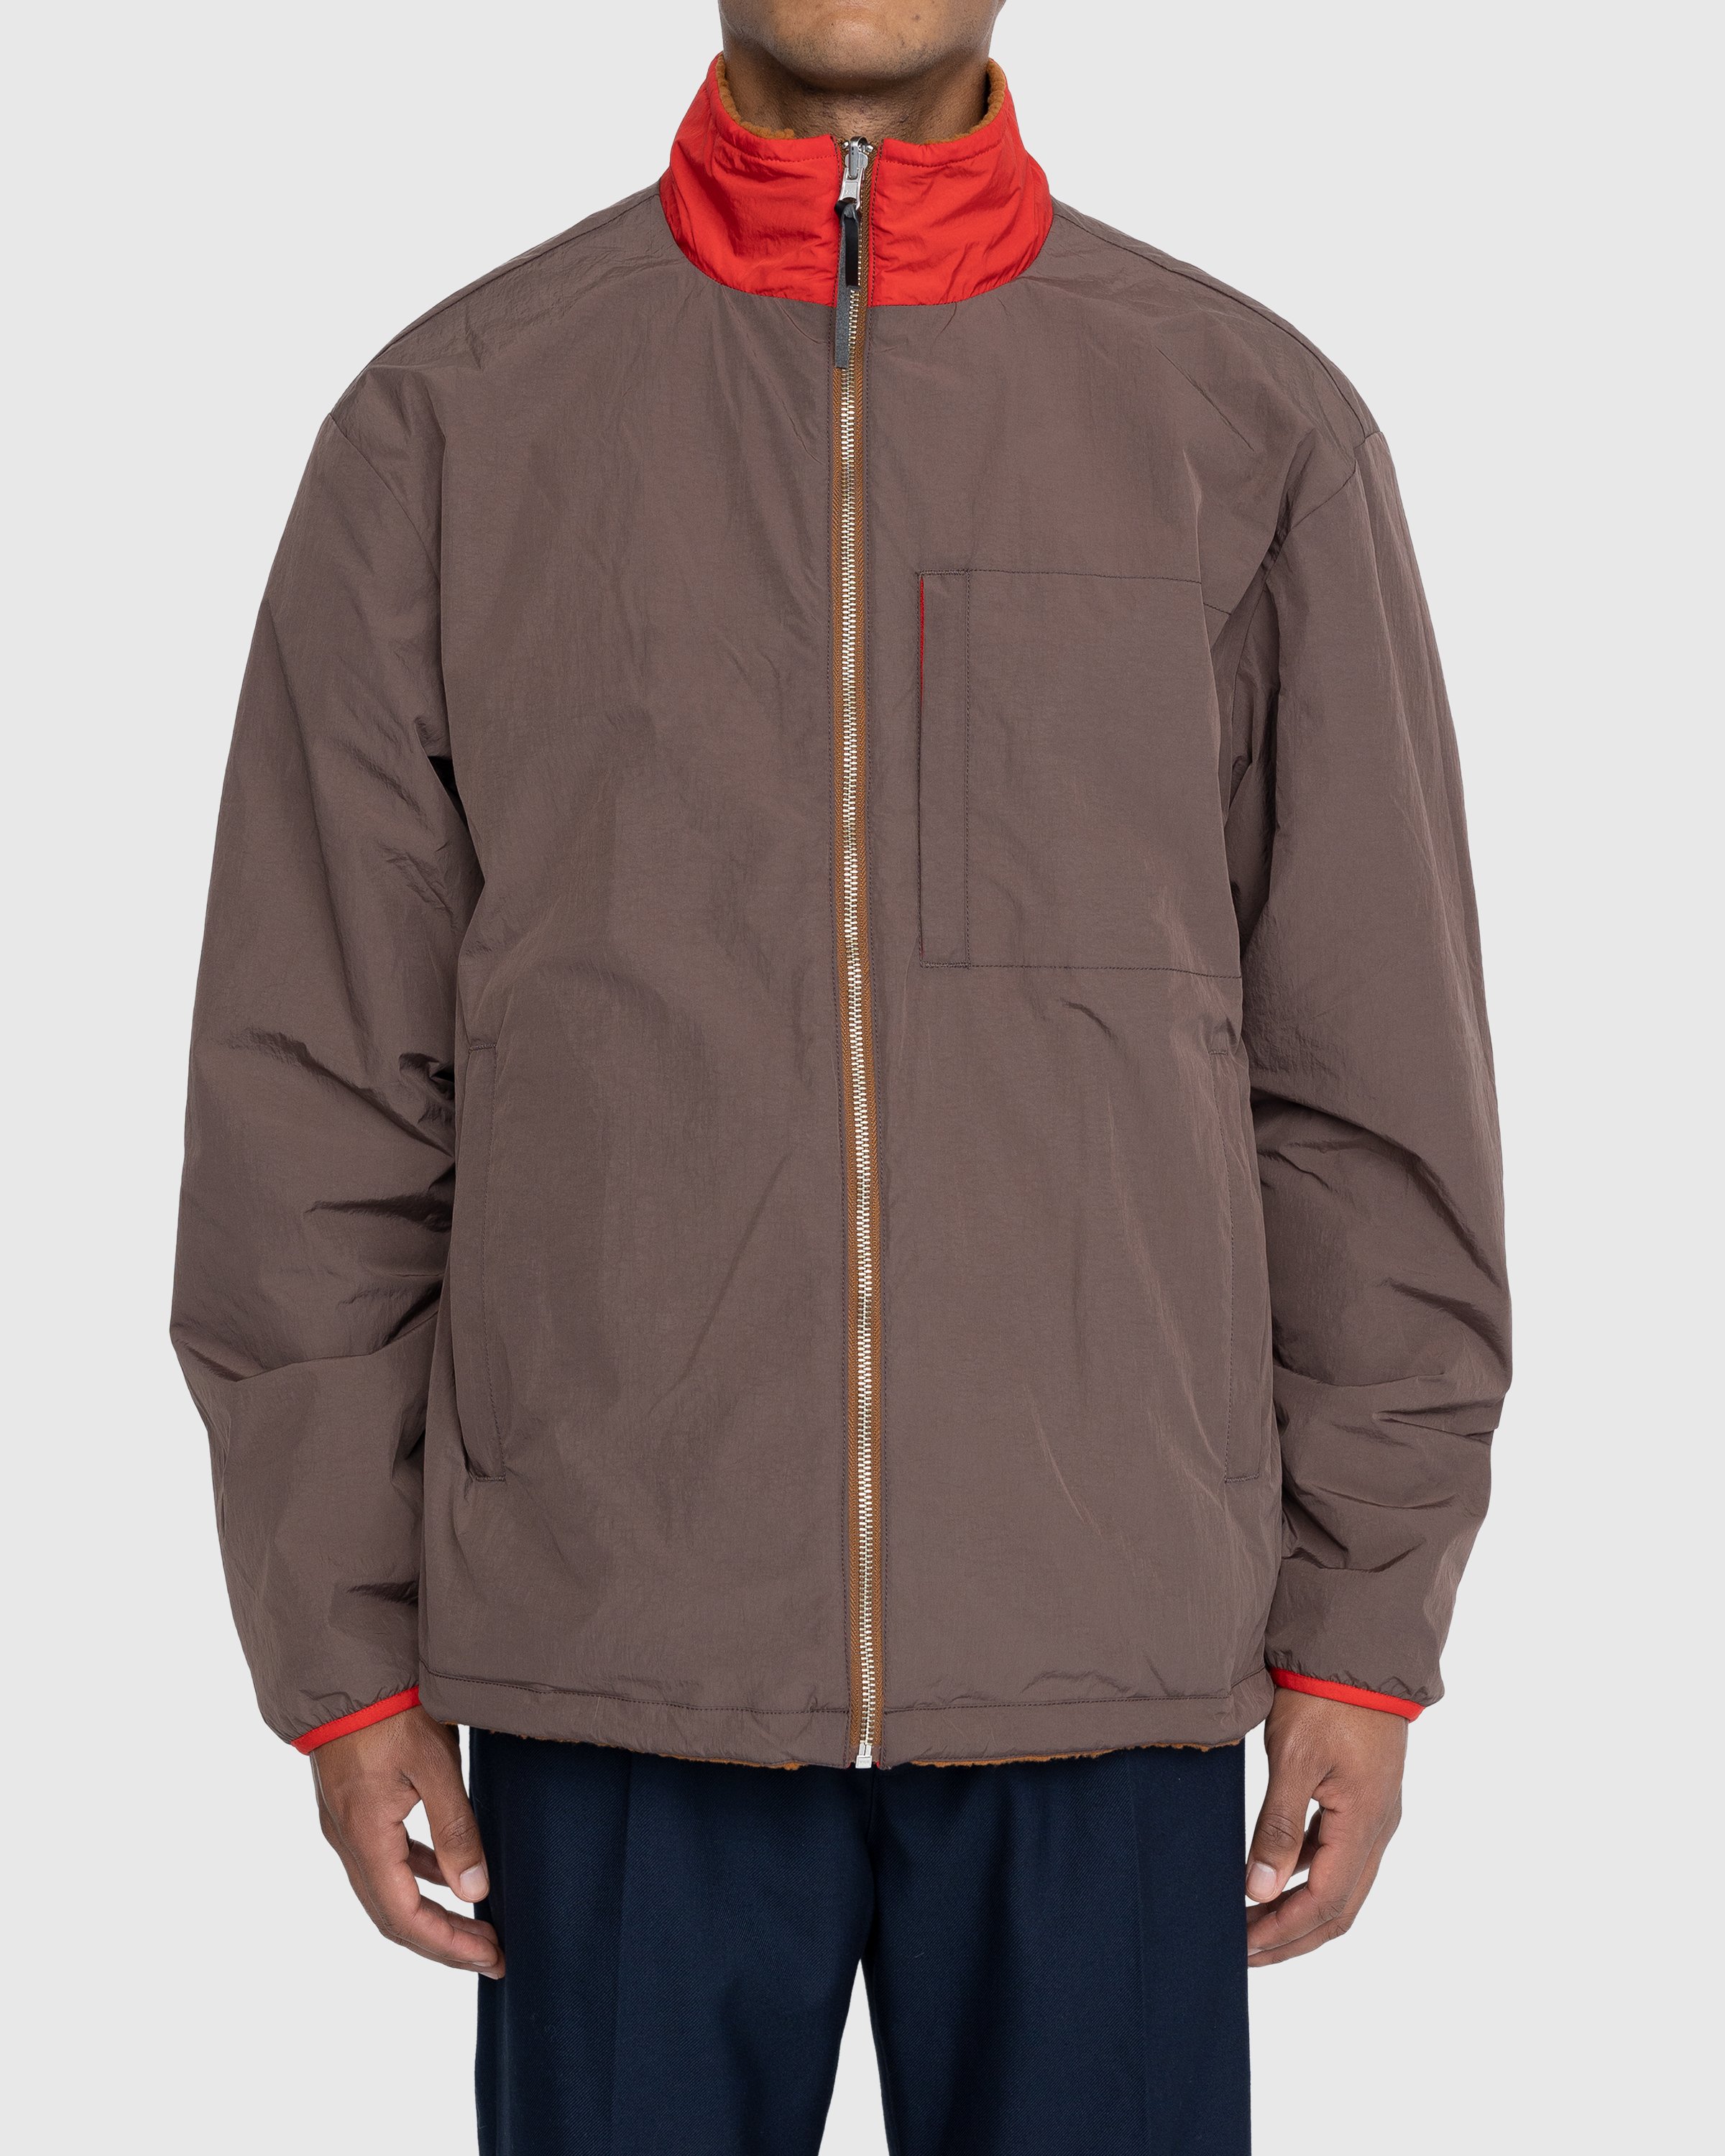 Highsnobiety - Reversible Polar Fleece Zip Jacket Chili Red/ Dark Brown - Clothing - Brown - Image 3